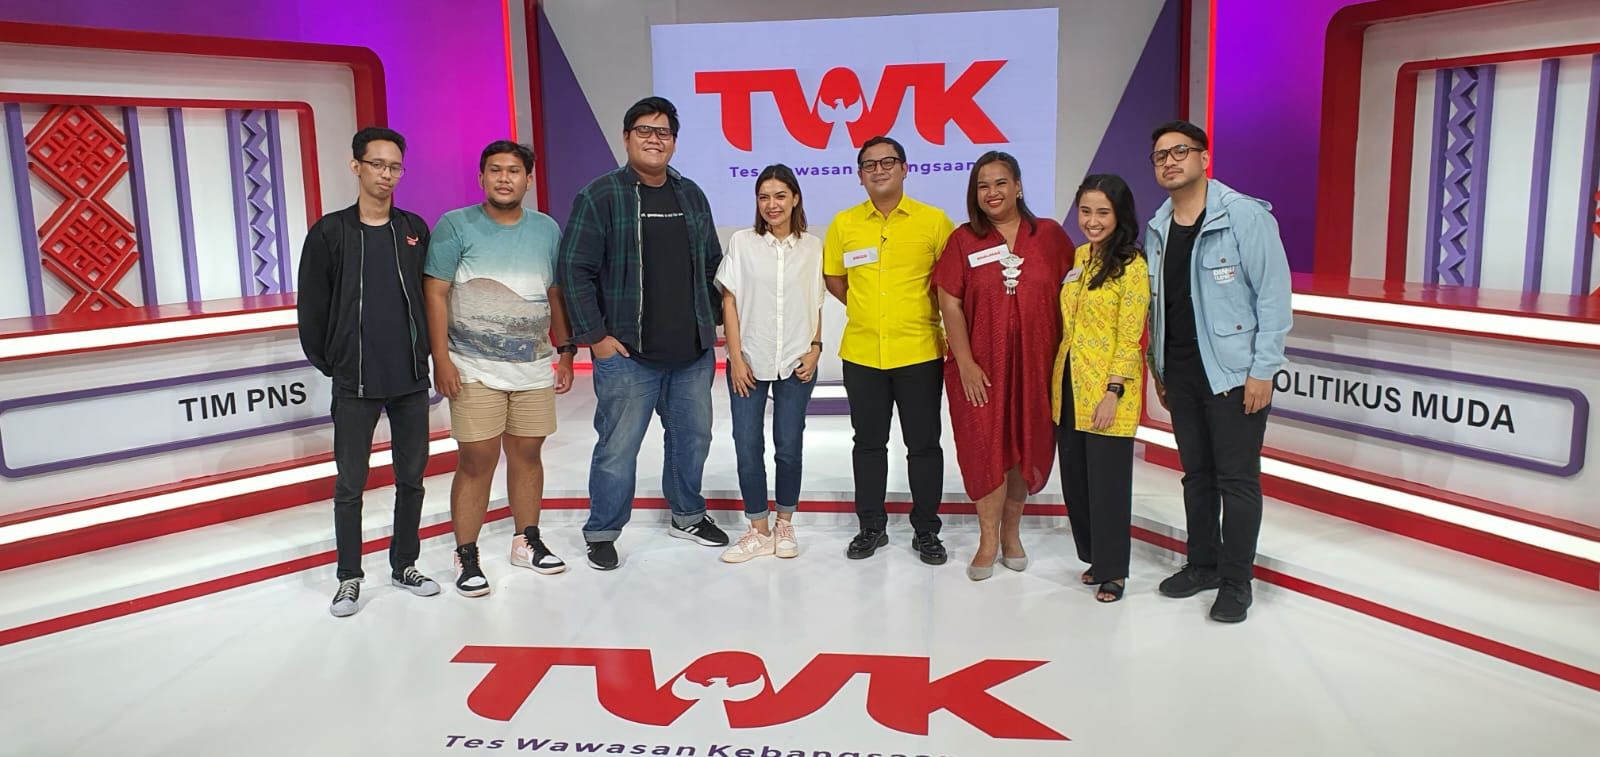 Farah Savira bergabung dengan tim “Politikus Muda” dalam acara kuis TWK oleh channel YouTube Narasi Newsroom.